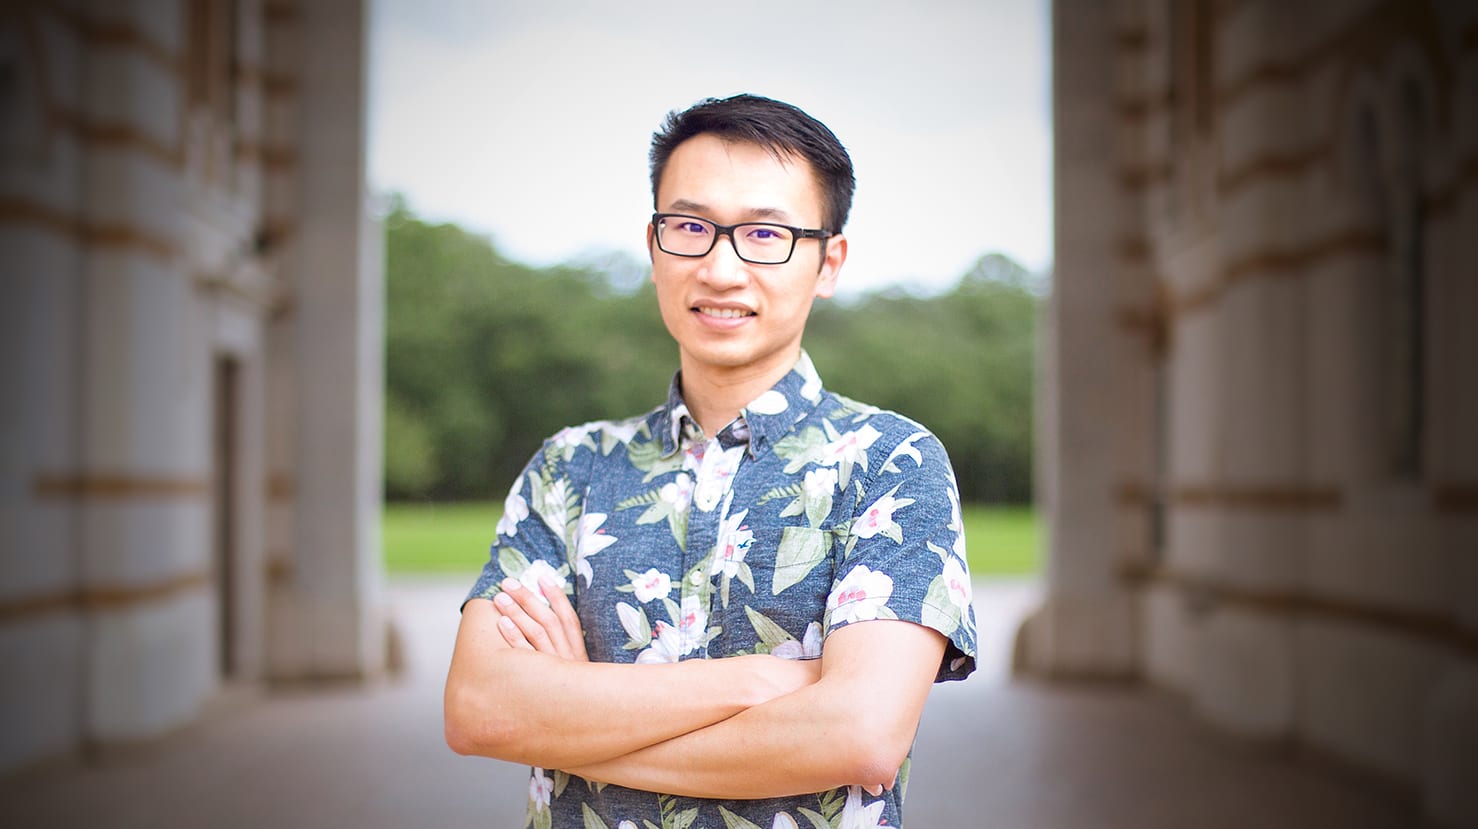 Xiaoye "Steven" Sun, CS PhD student at Rice University